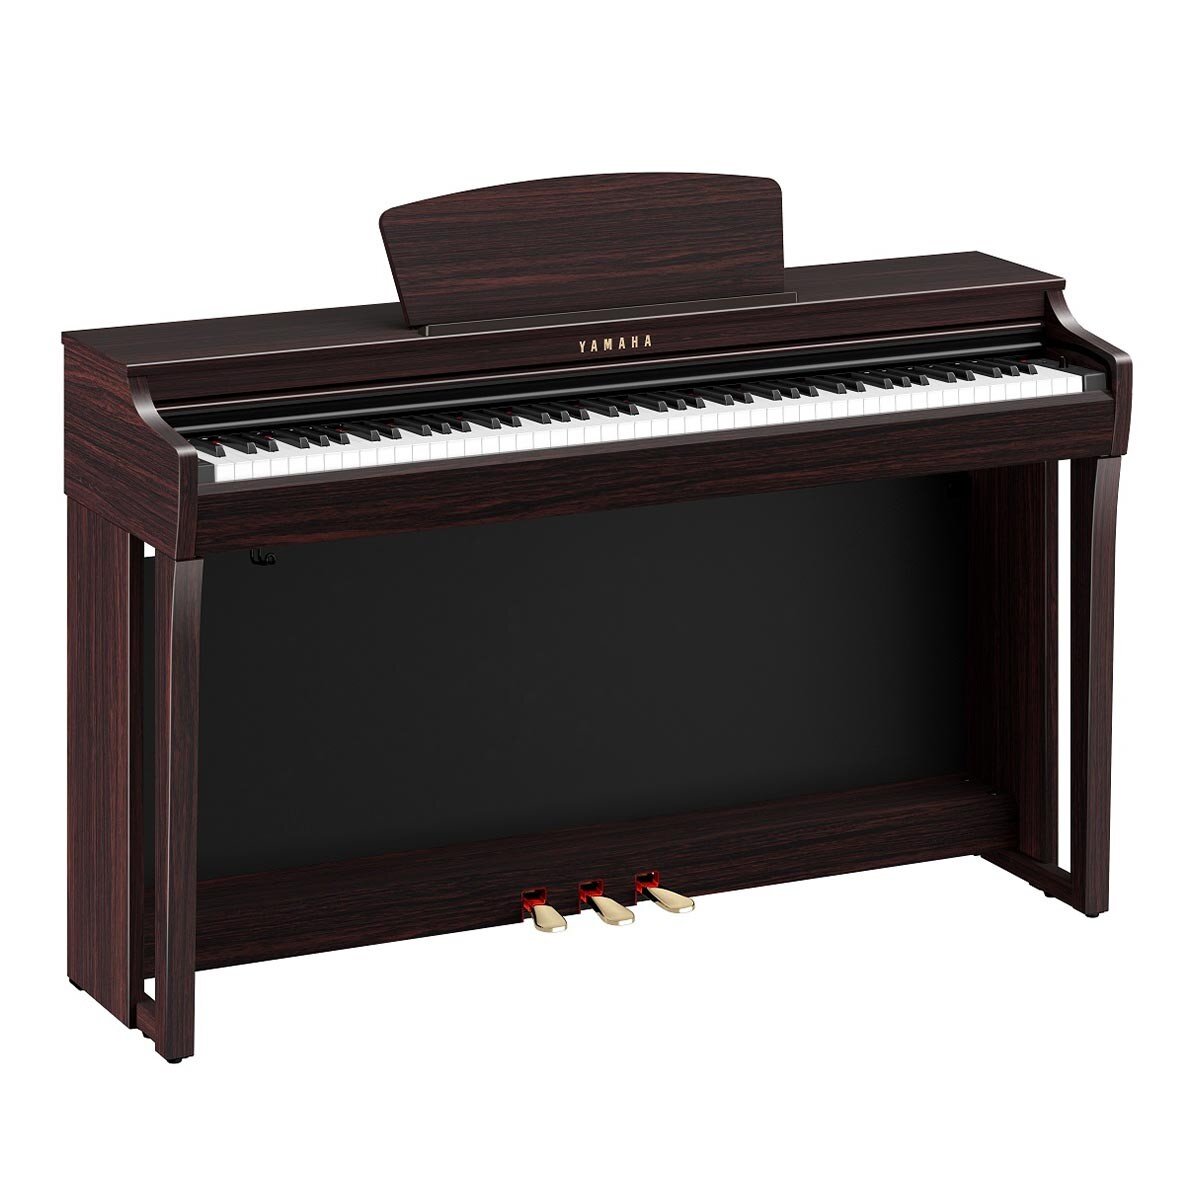 Yamaha Clavinova數位鋼琴 CLP725R 深玫瑰木色